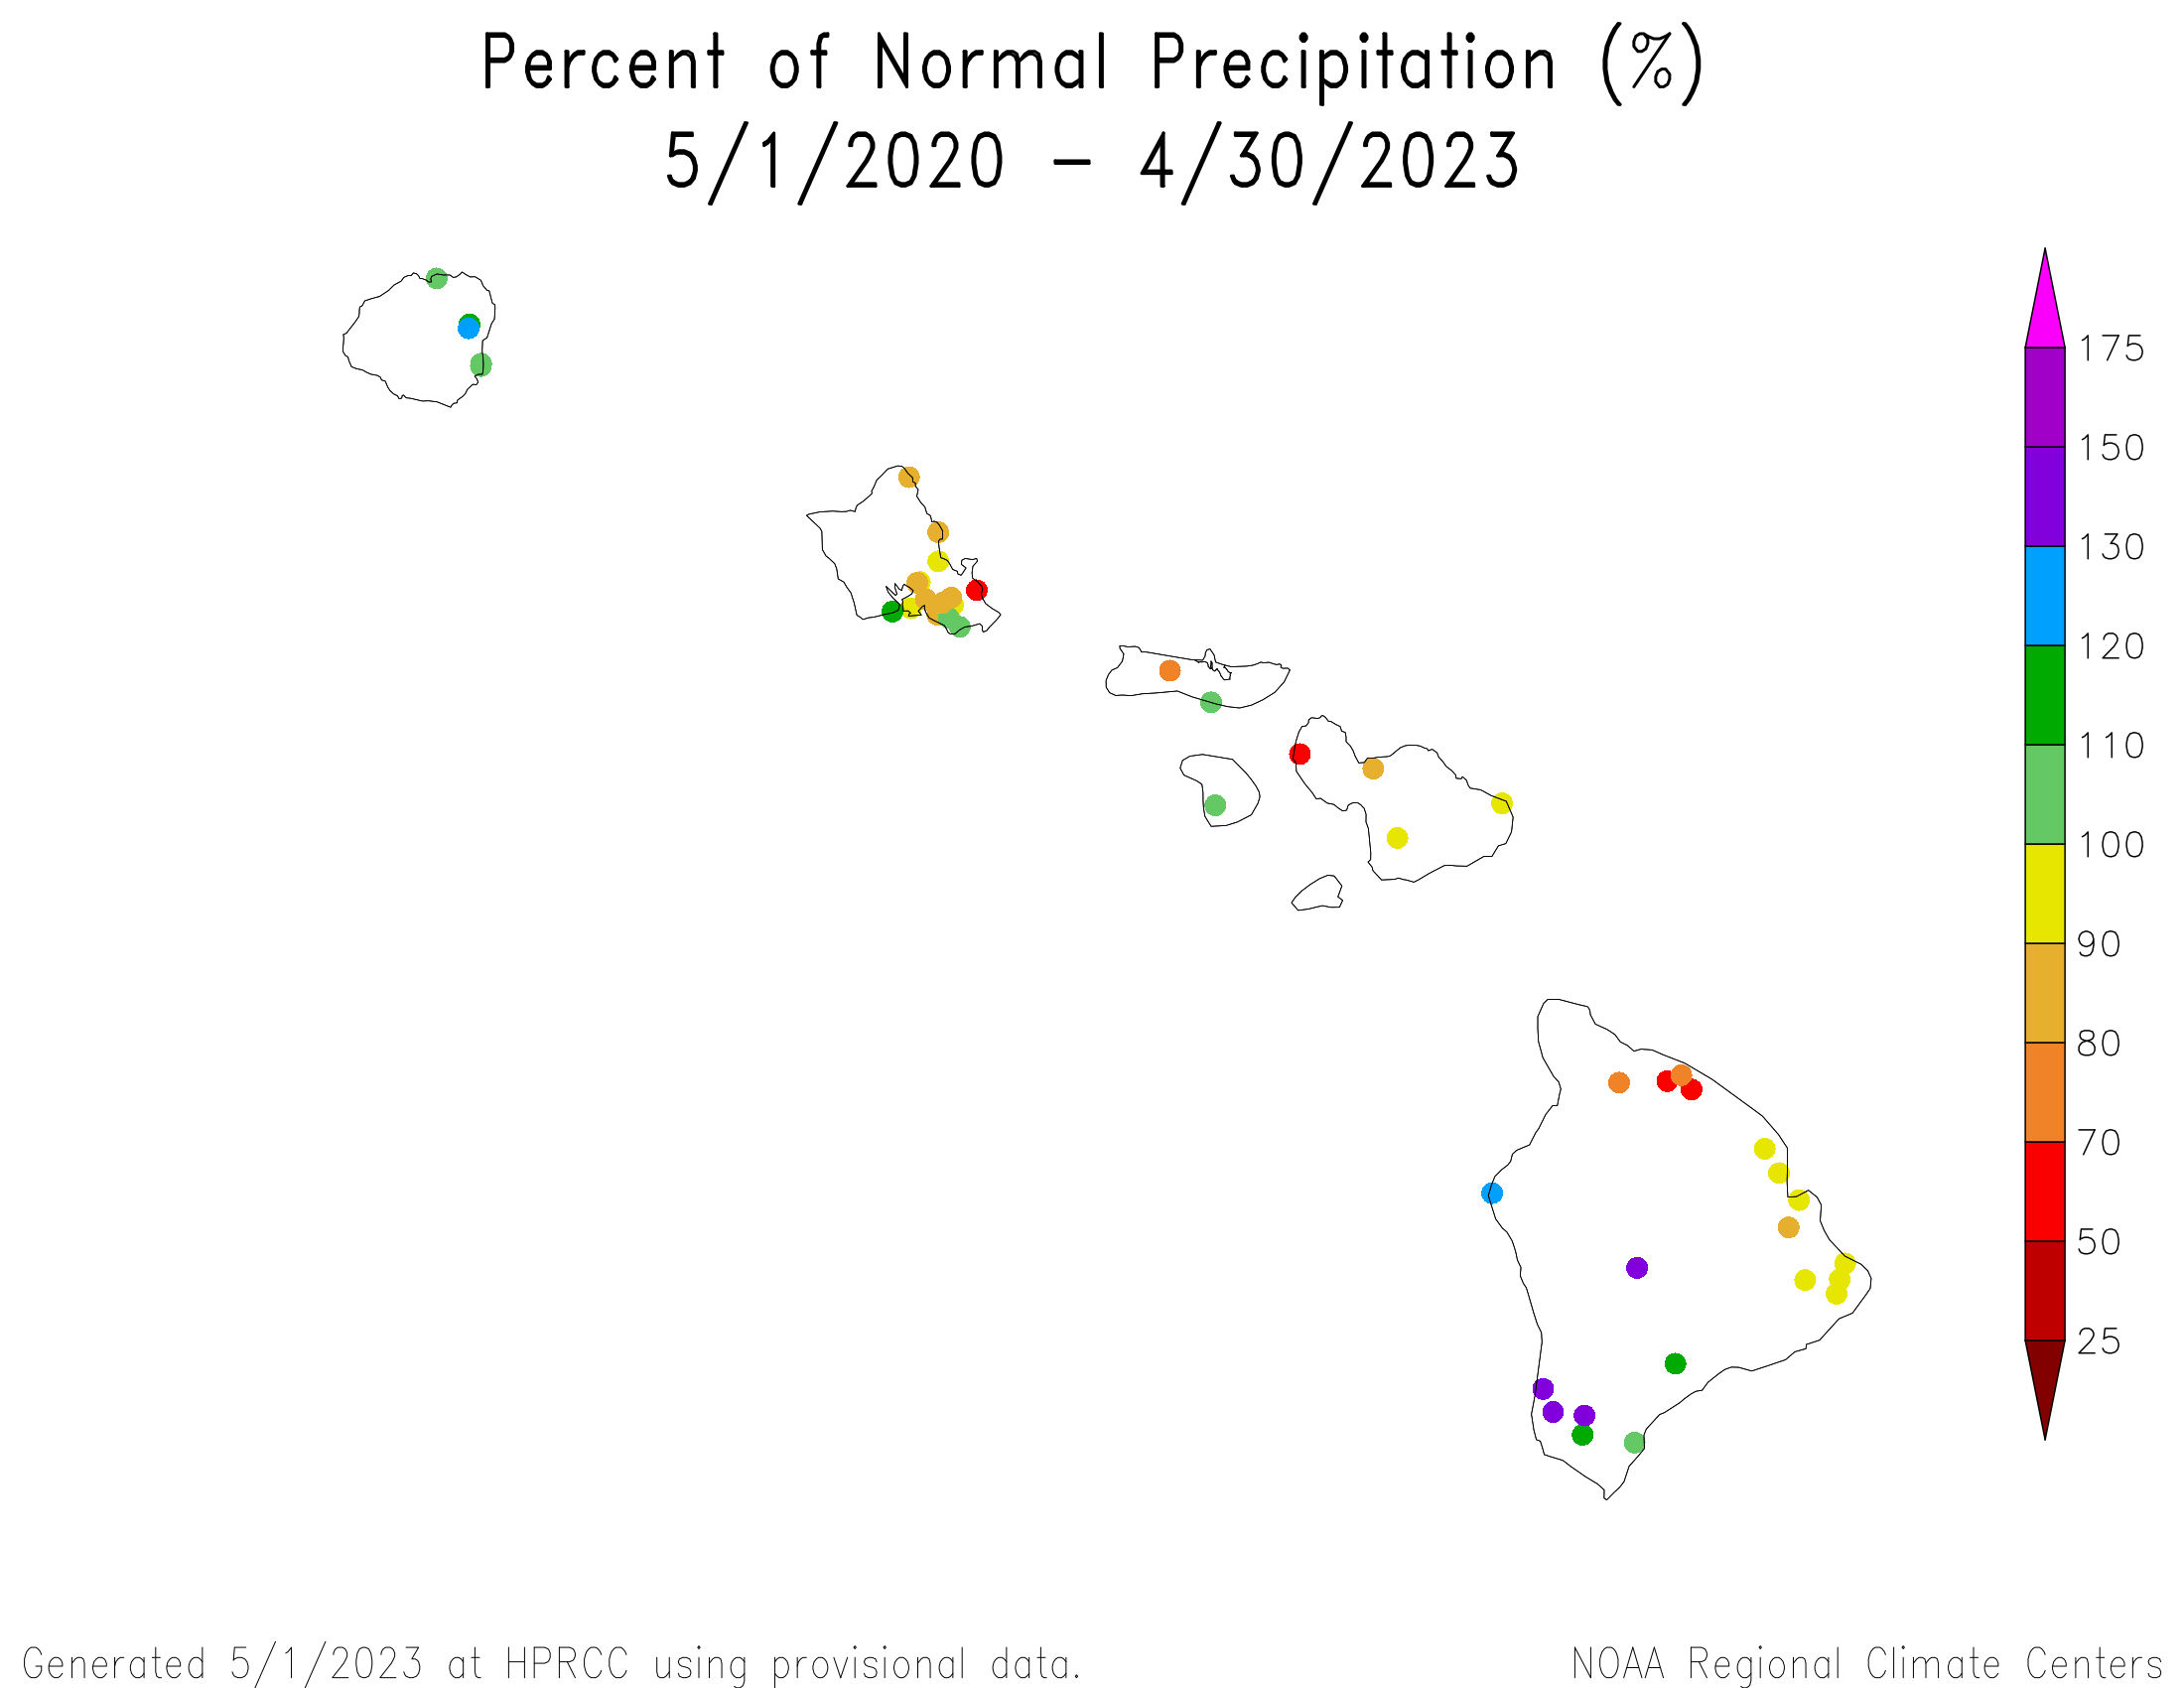 Hawaii Percent of Normal Precipitation, May 2020-April 2023